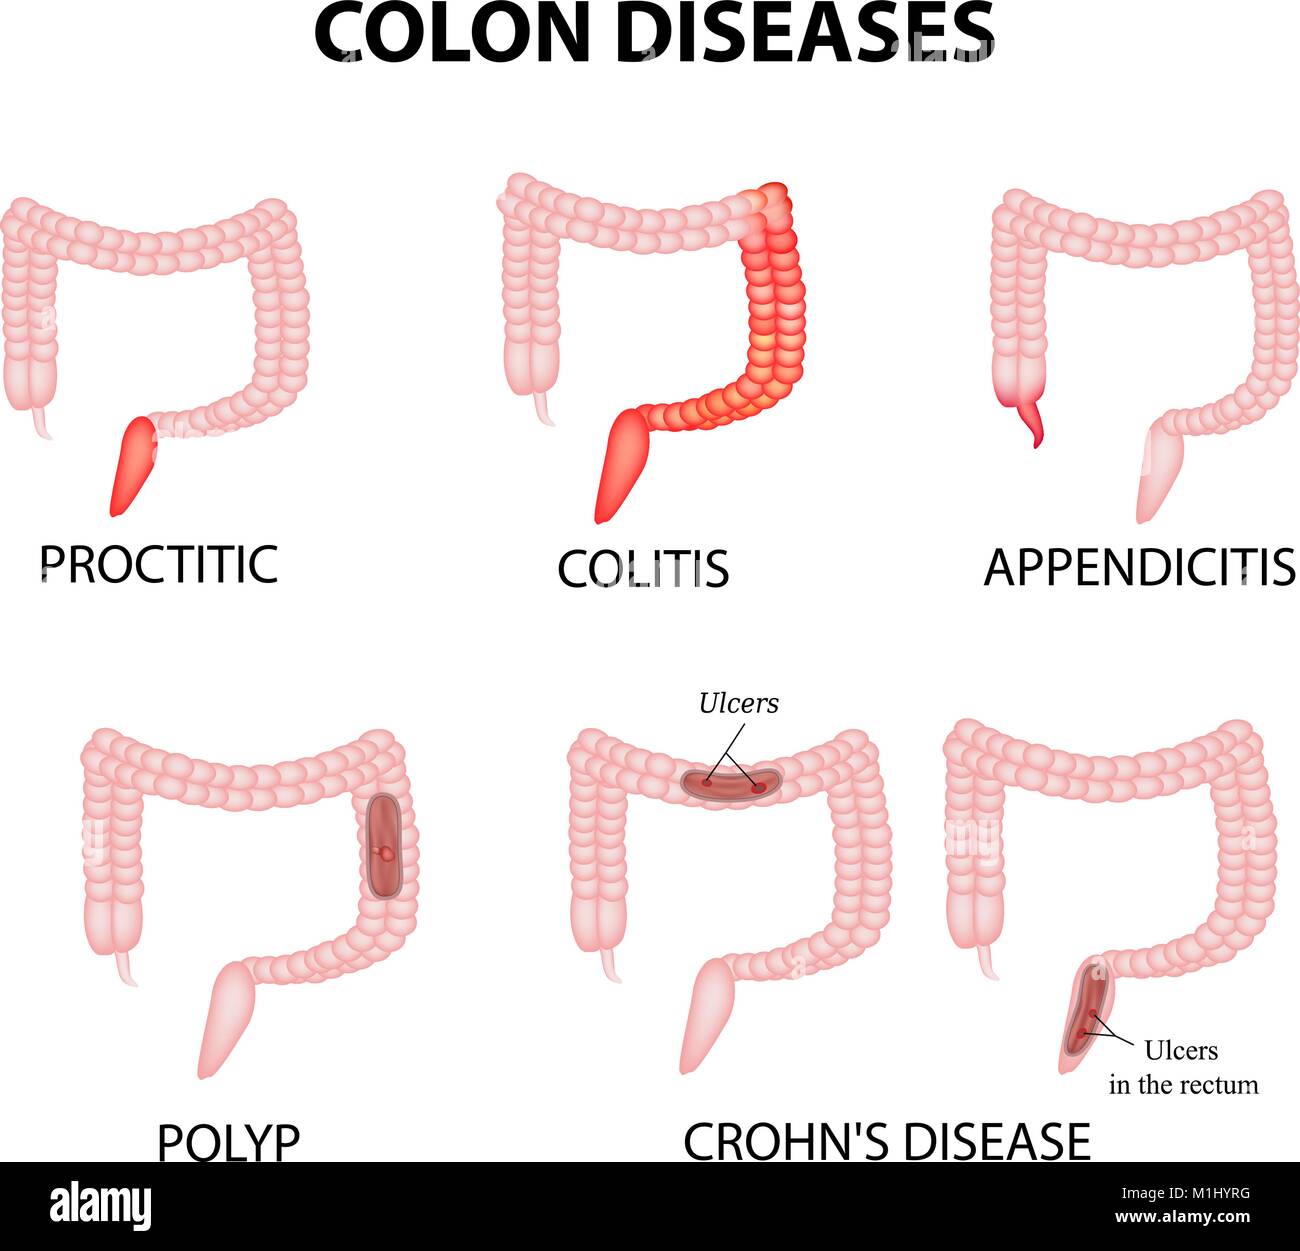 Colon diseases. Proctitis, colitis, appendicitis, polyp, ulcer, Crohn